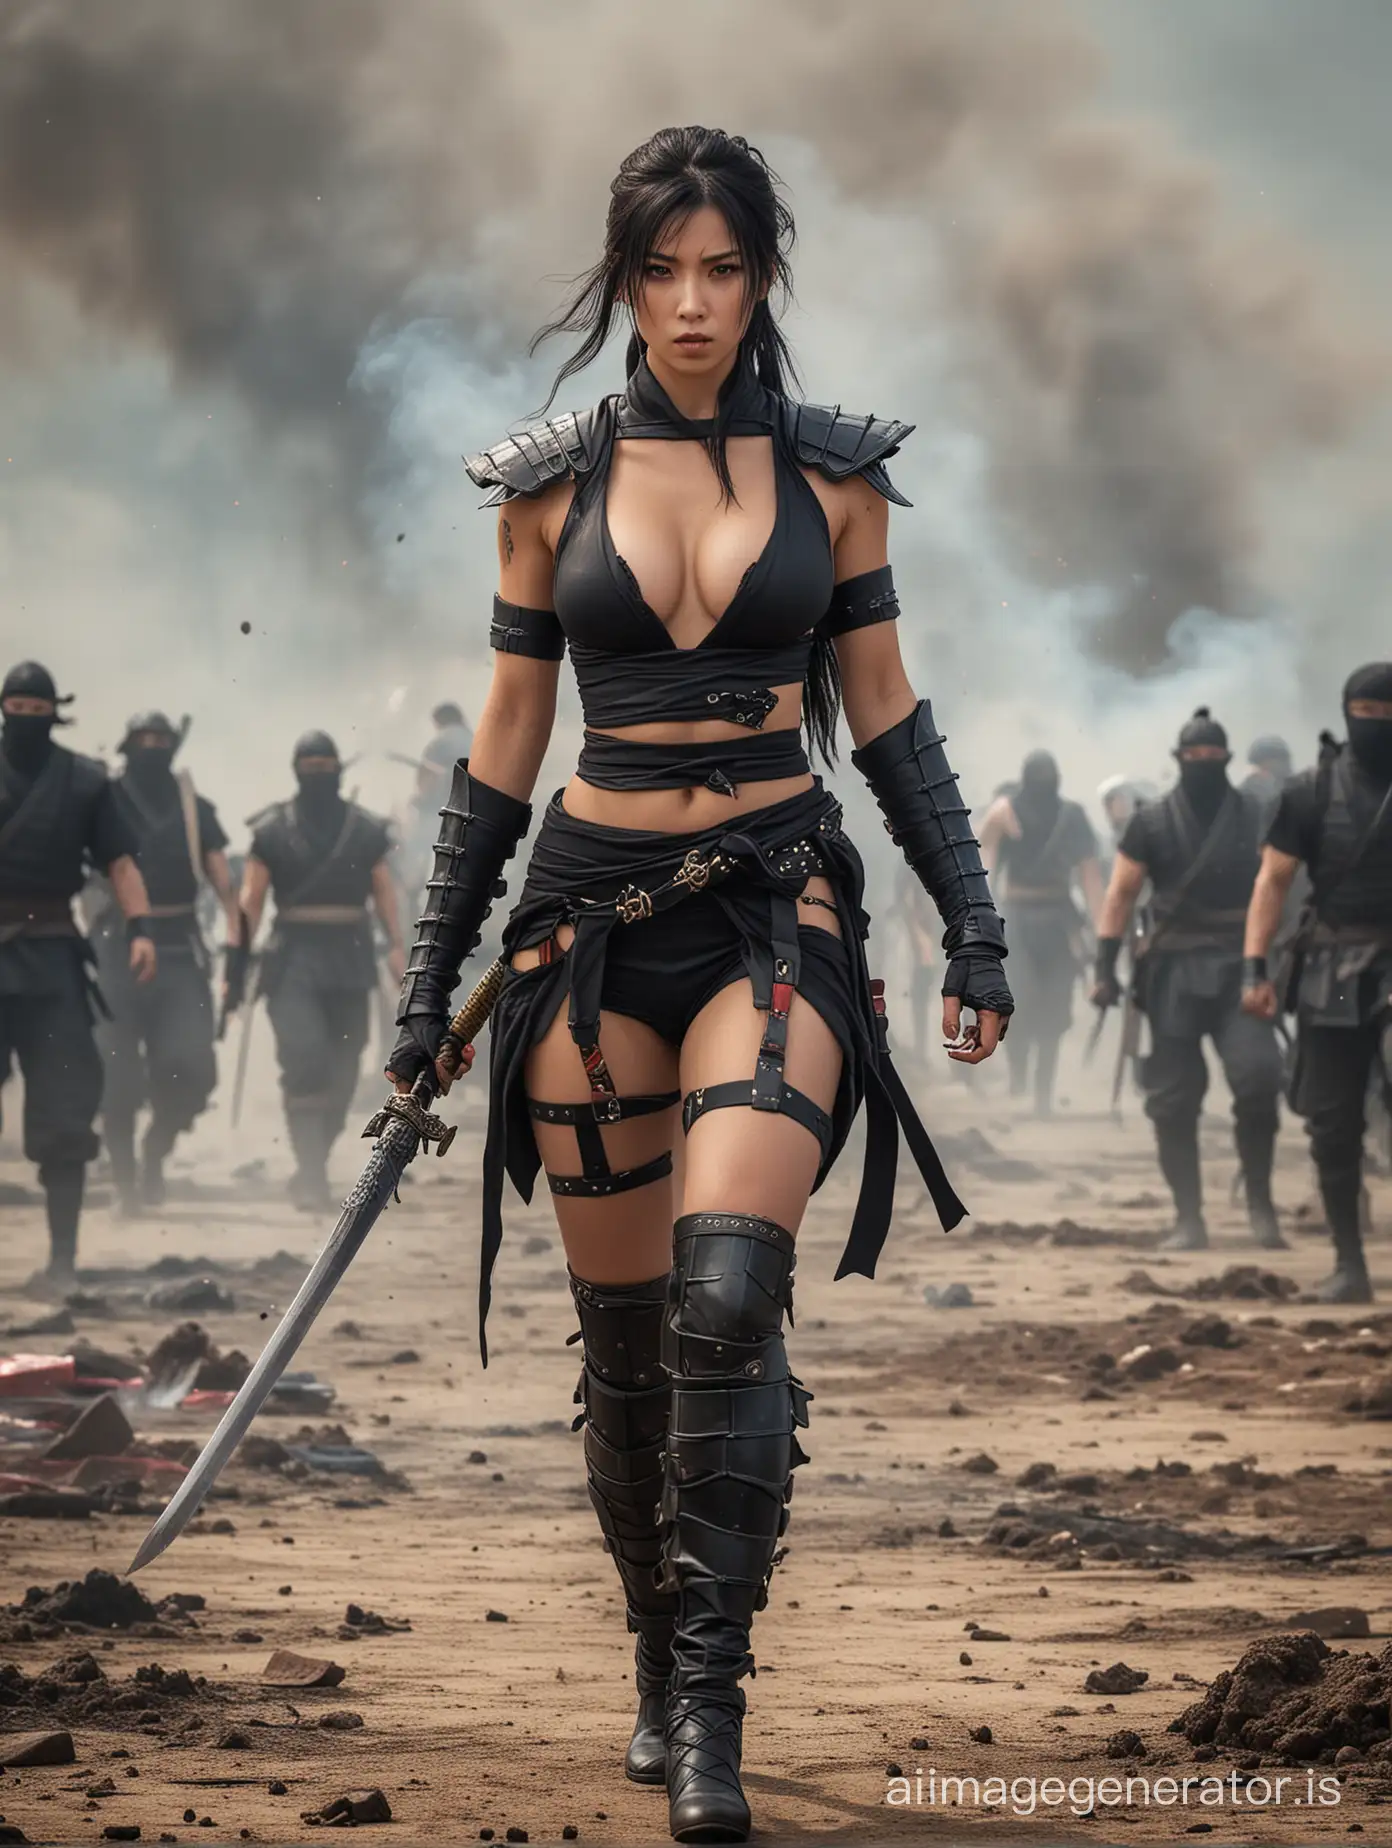 Victorious-Female-Ninja-Amidst-Battlefield-Carnage